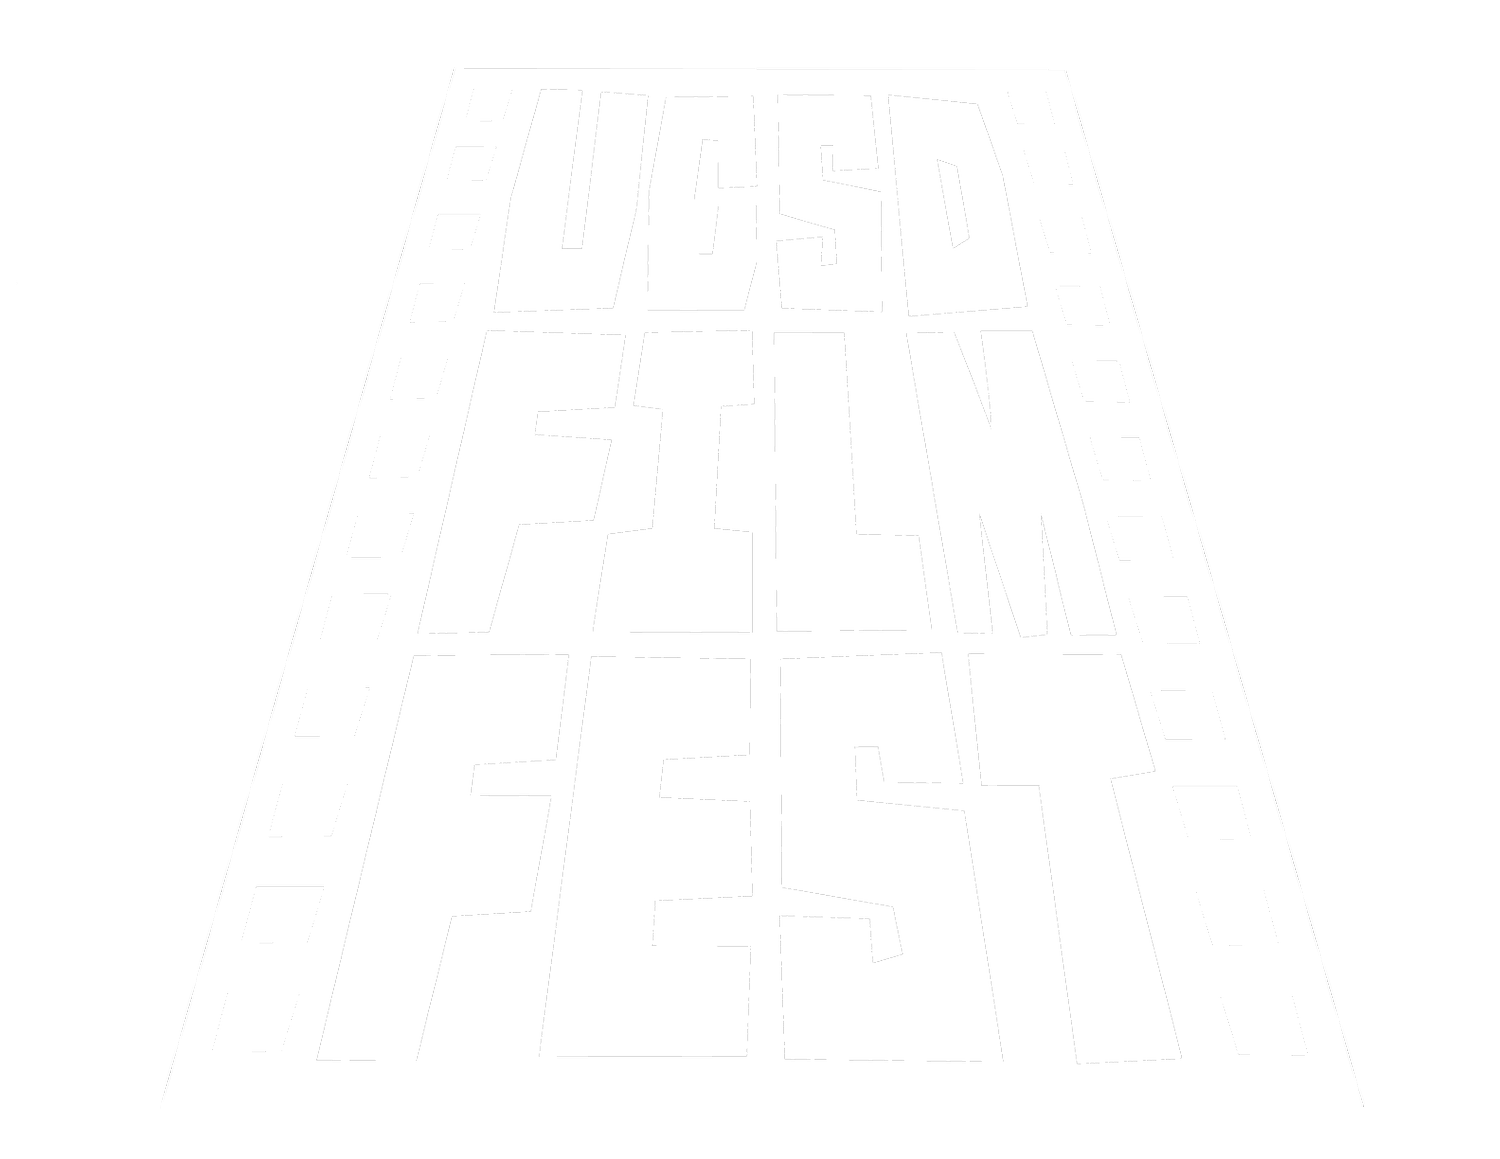 UCSD Film Festival